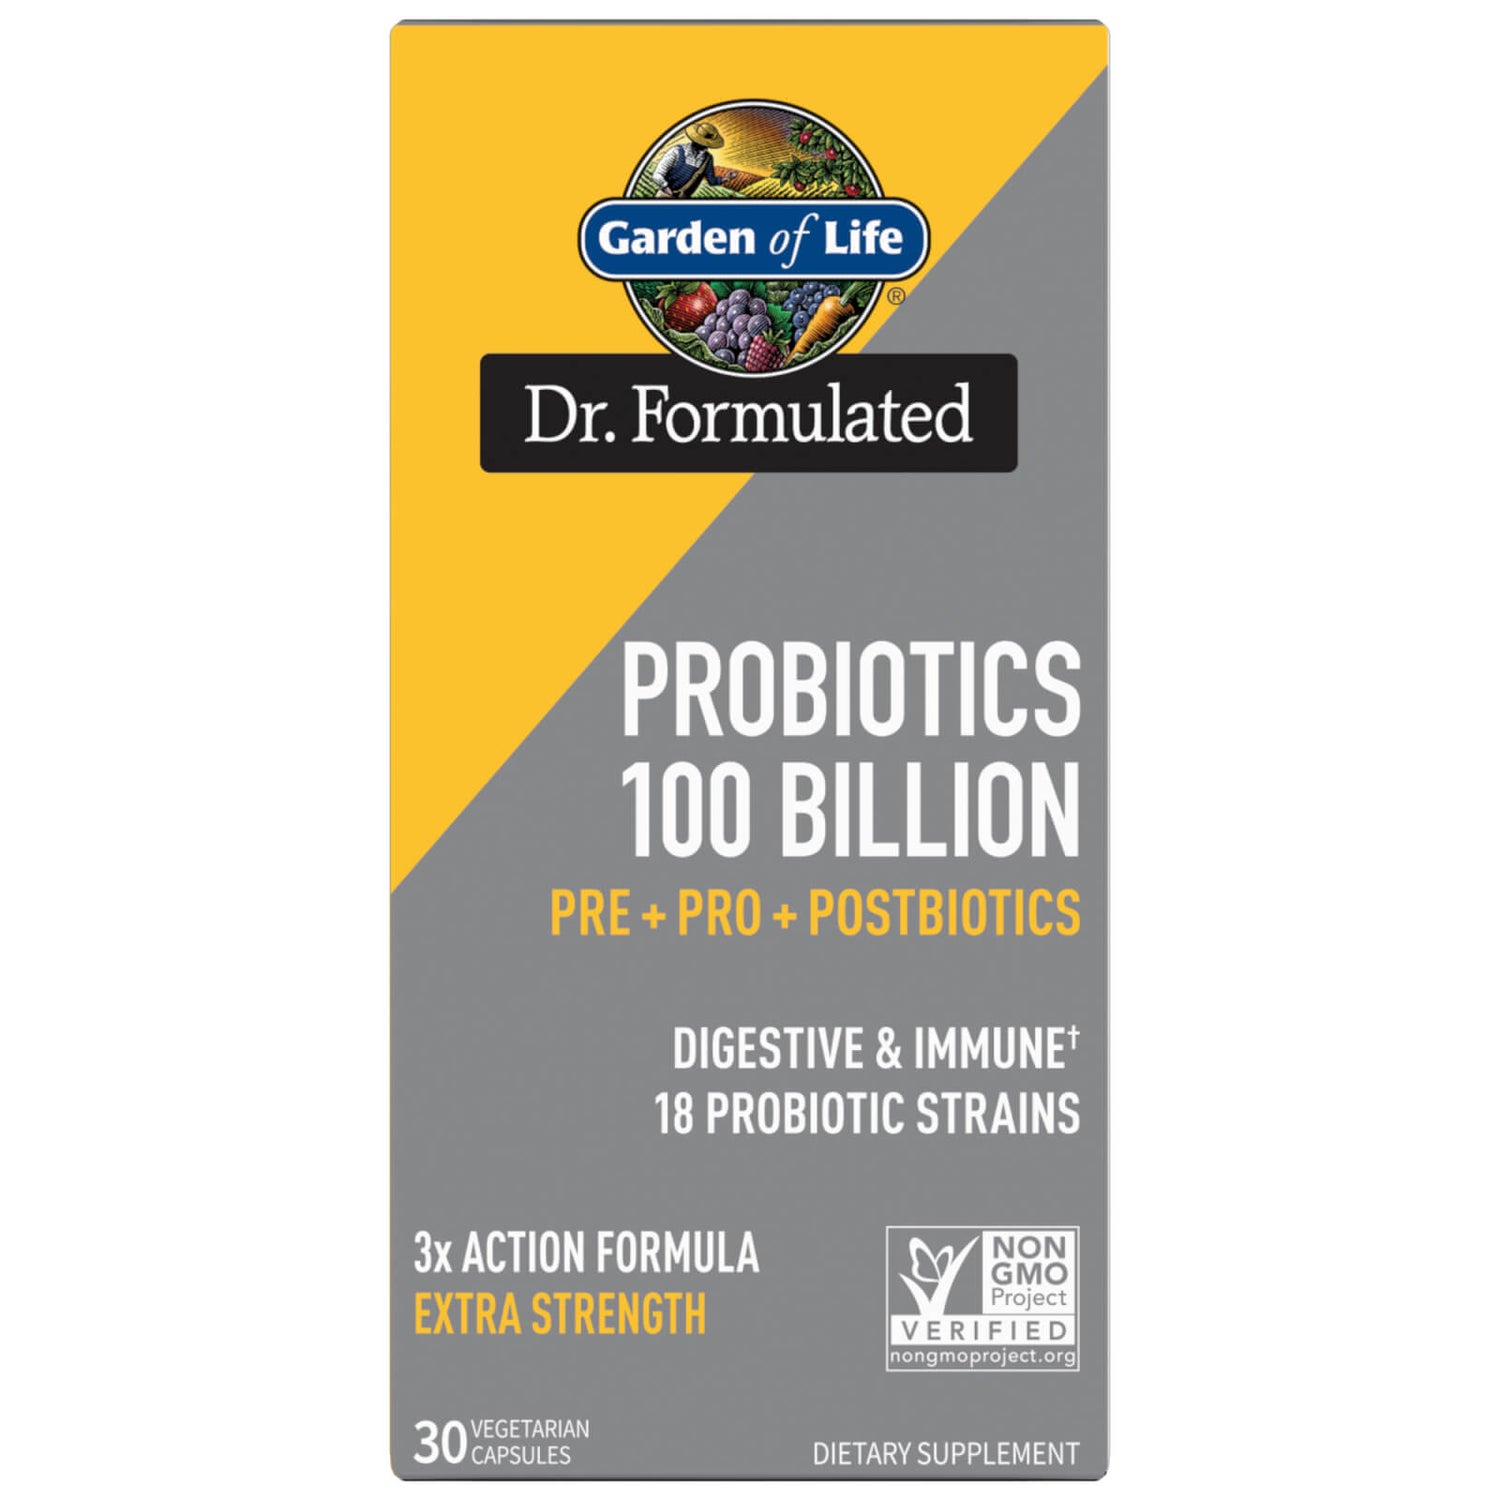 Probiotique Pre+Pro+Postbiotics 100B Dr. Formulated